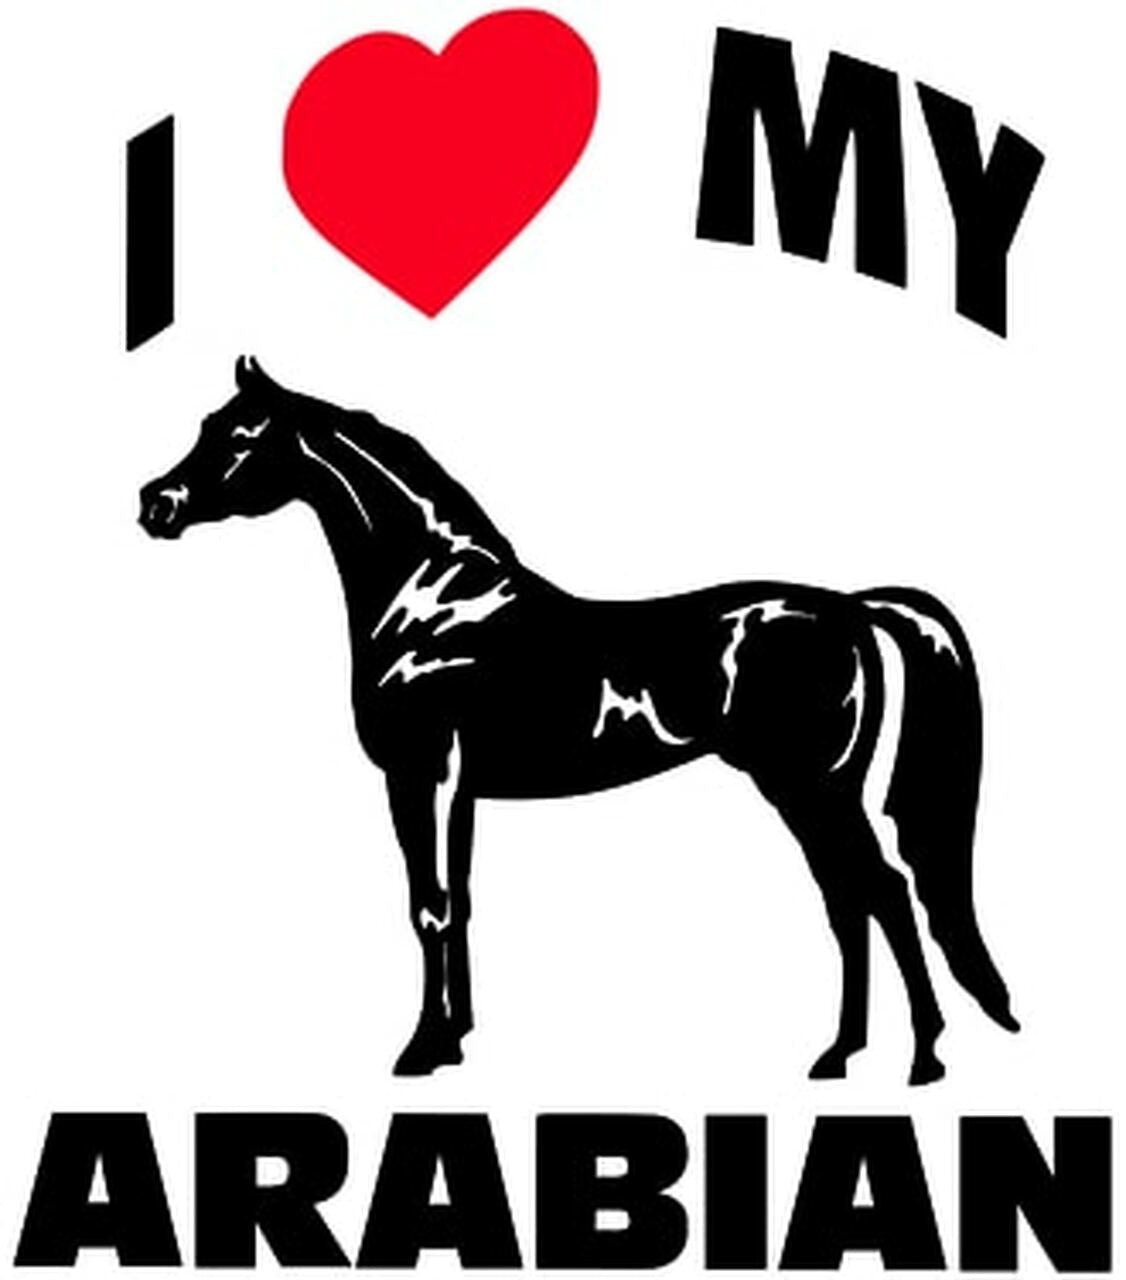 I Love My Horse Sticker